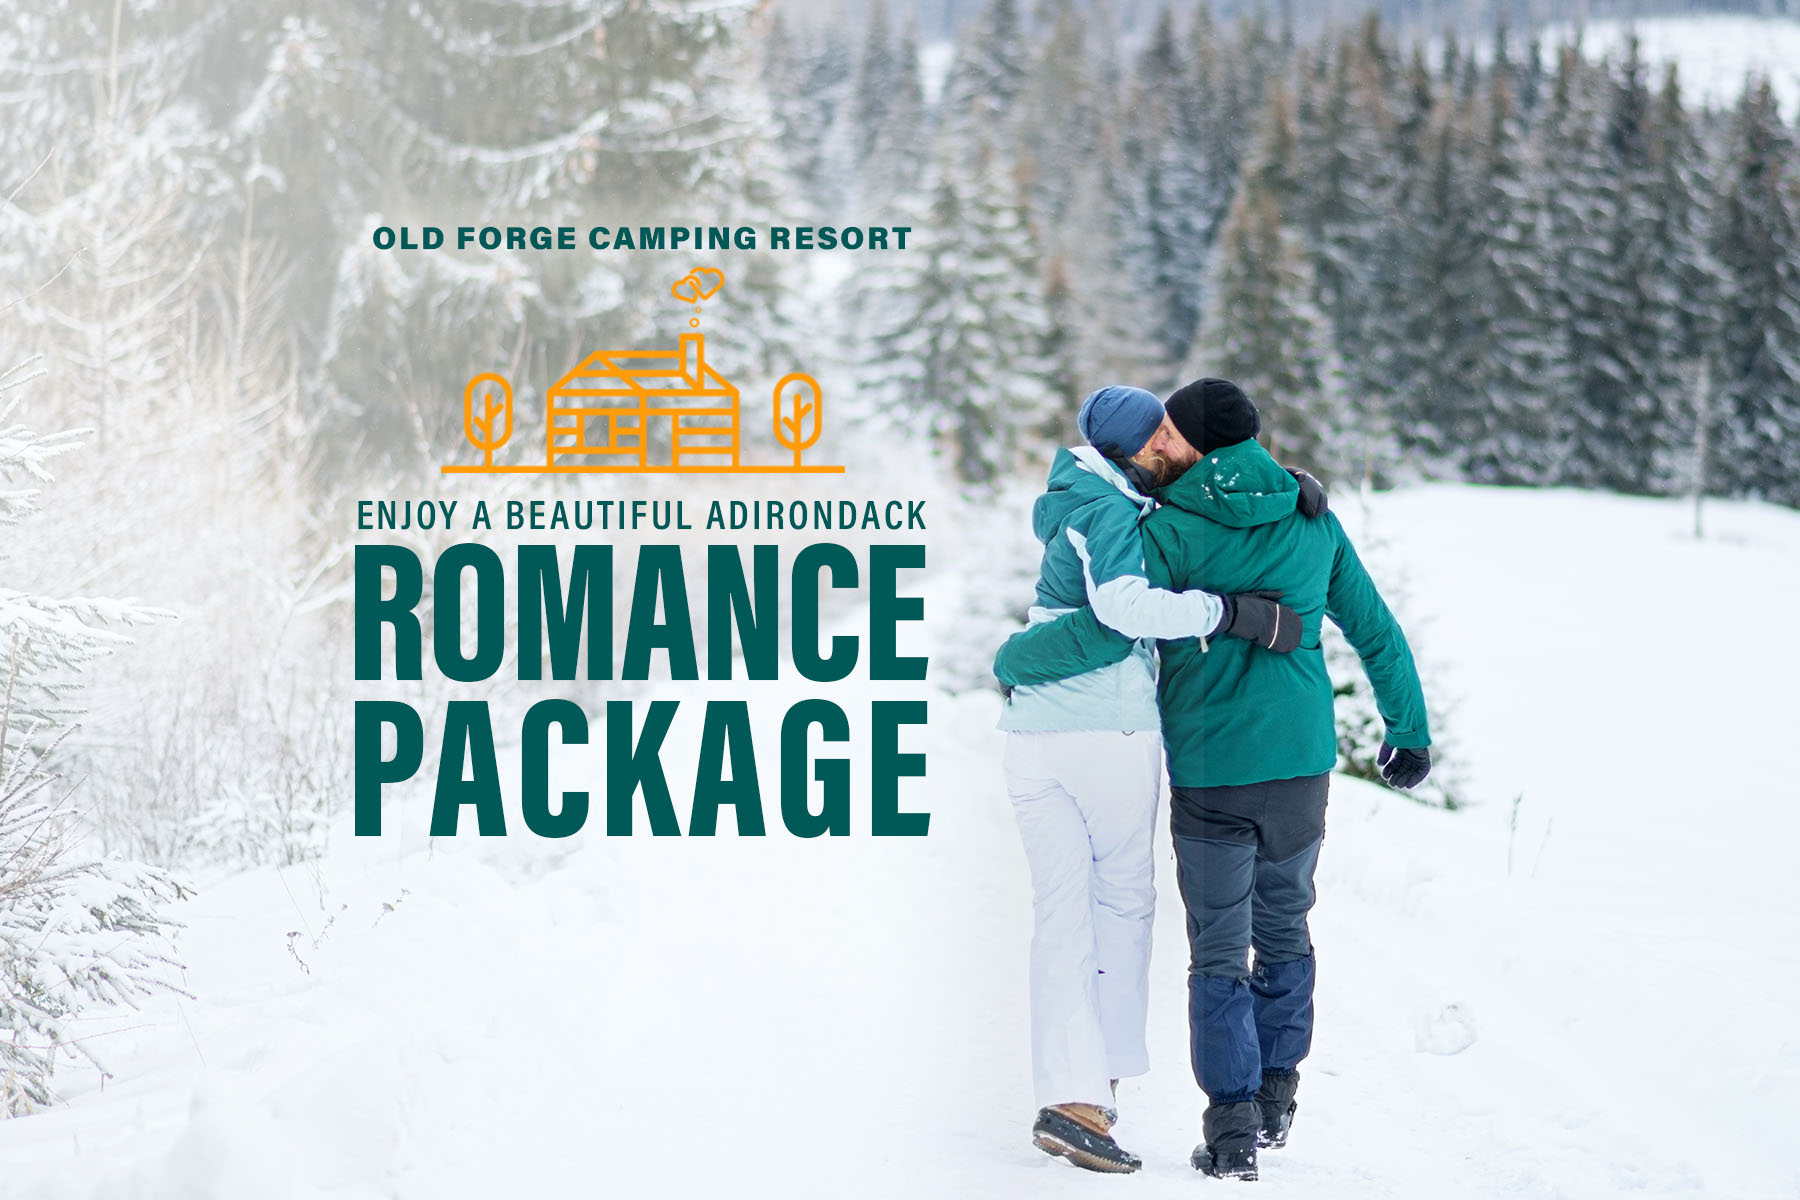 Adirondack Romance Package